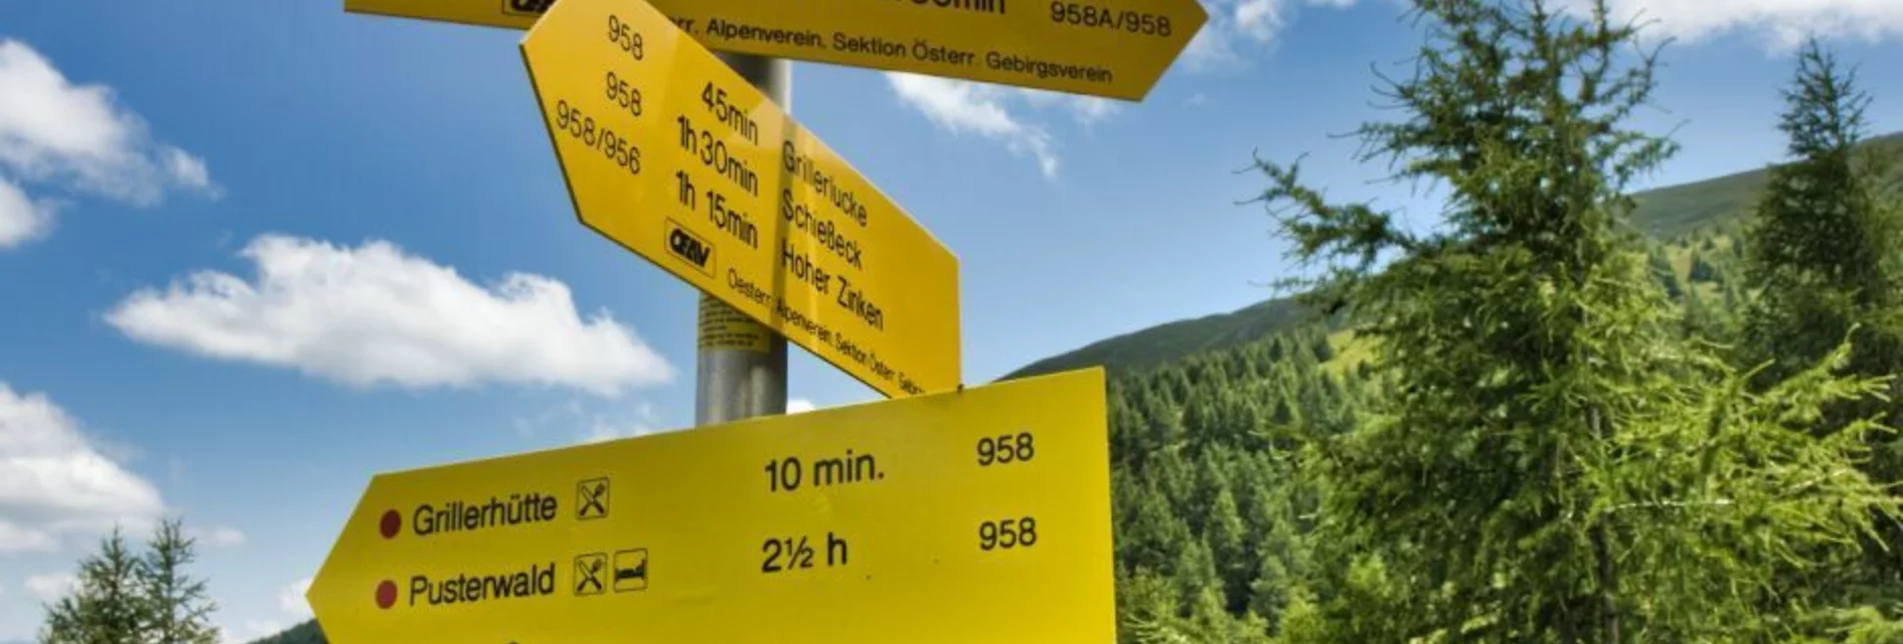 Hiking route Schießeck from Pusterwald - Touren-Impression #1 | © Weges OG